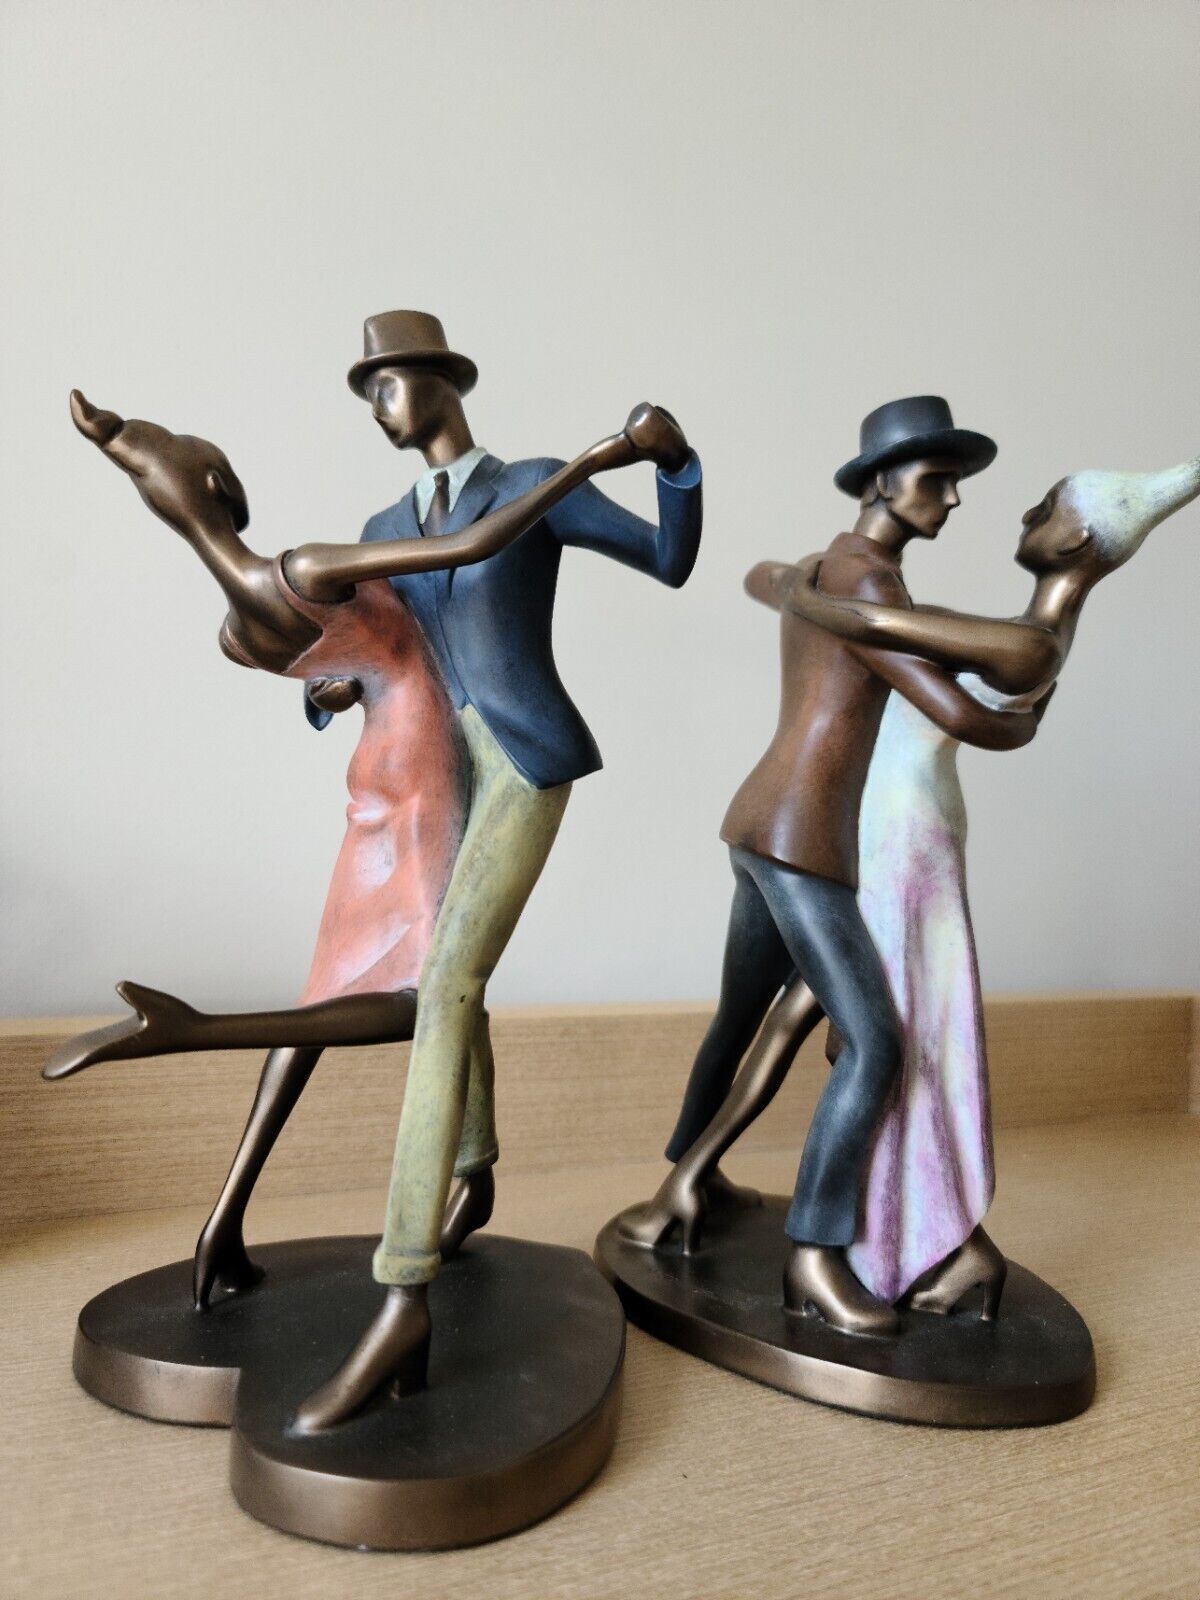 Vintage Summit Collection Pair Resin Figurines “Let’s Dance - Waltz” 10.5” 2001